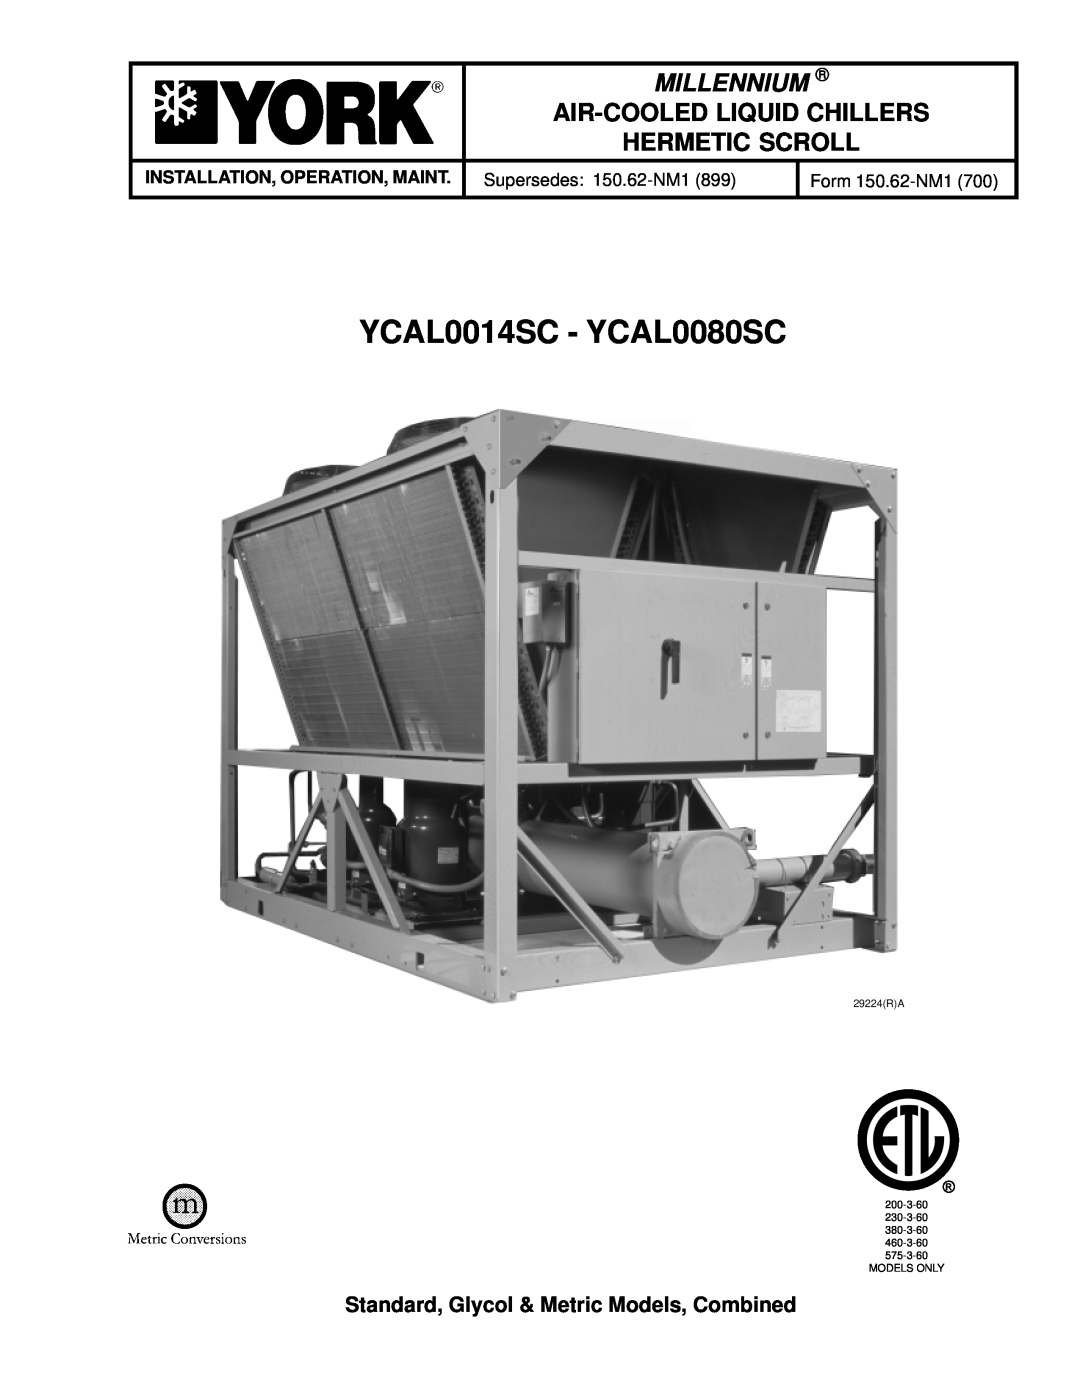 York manual Air-Cooledliquid Chillers Hermetic Scroll, YCAL0014SC - YCAL0080SC, Millennium 